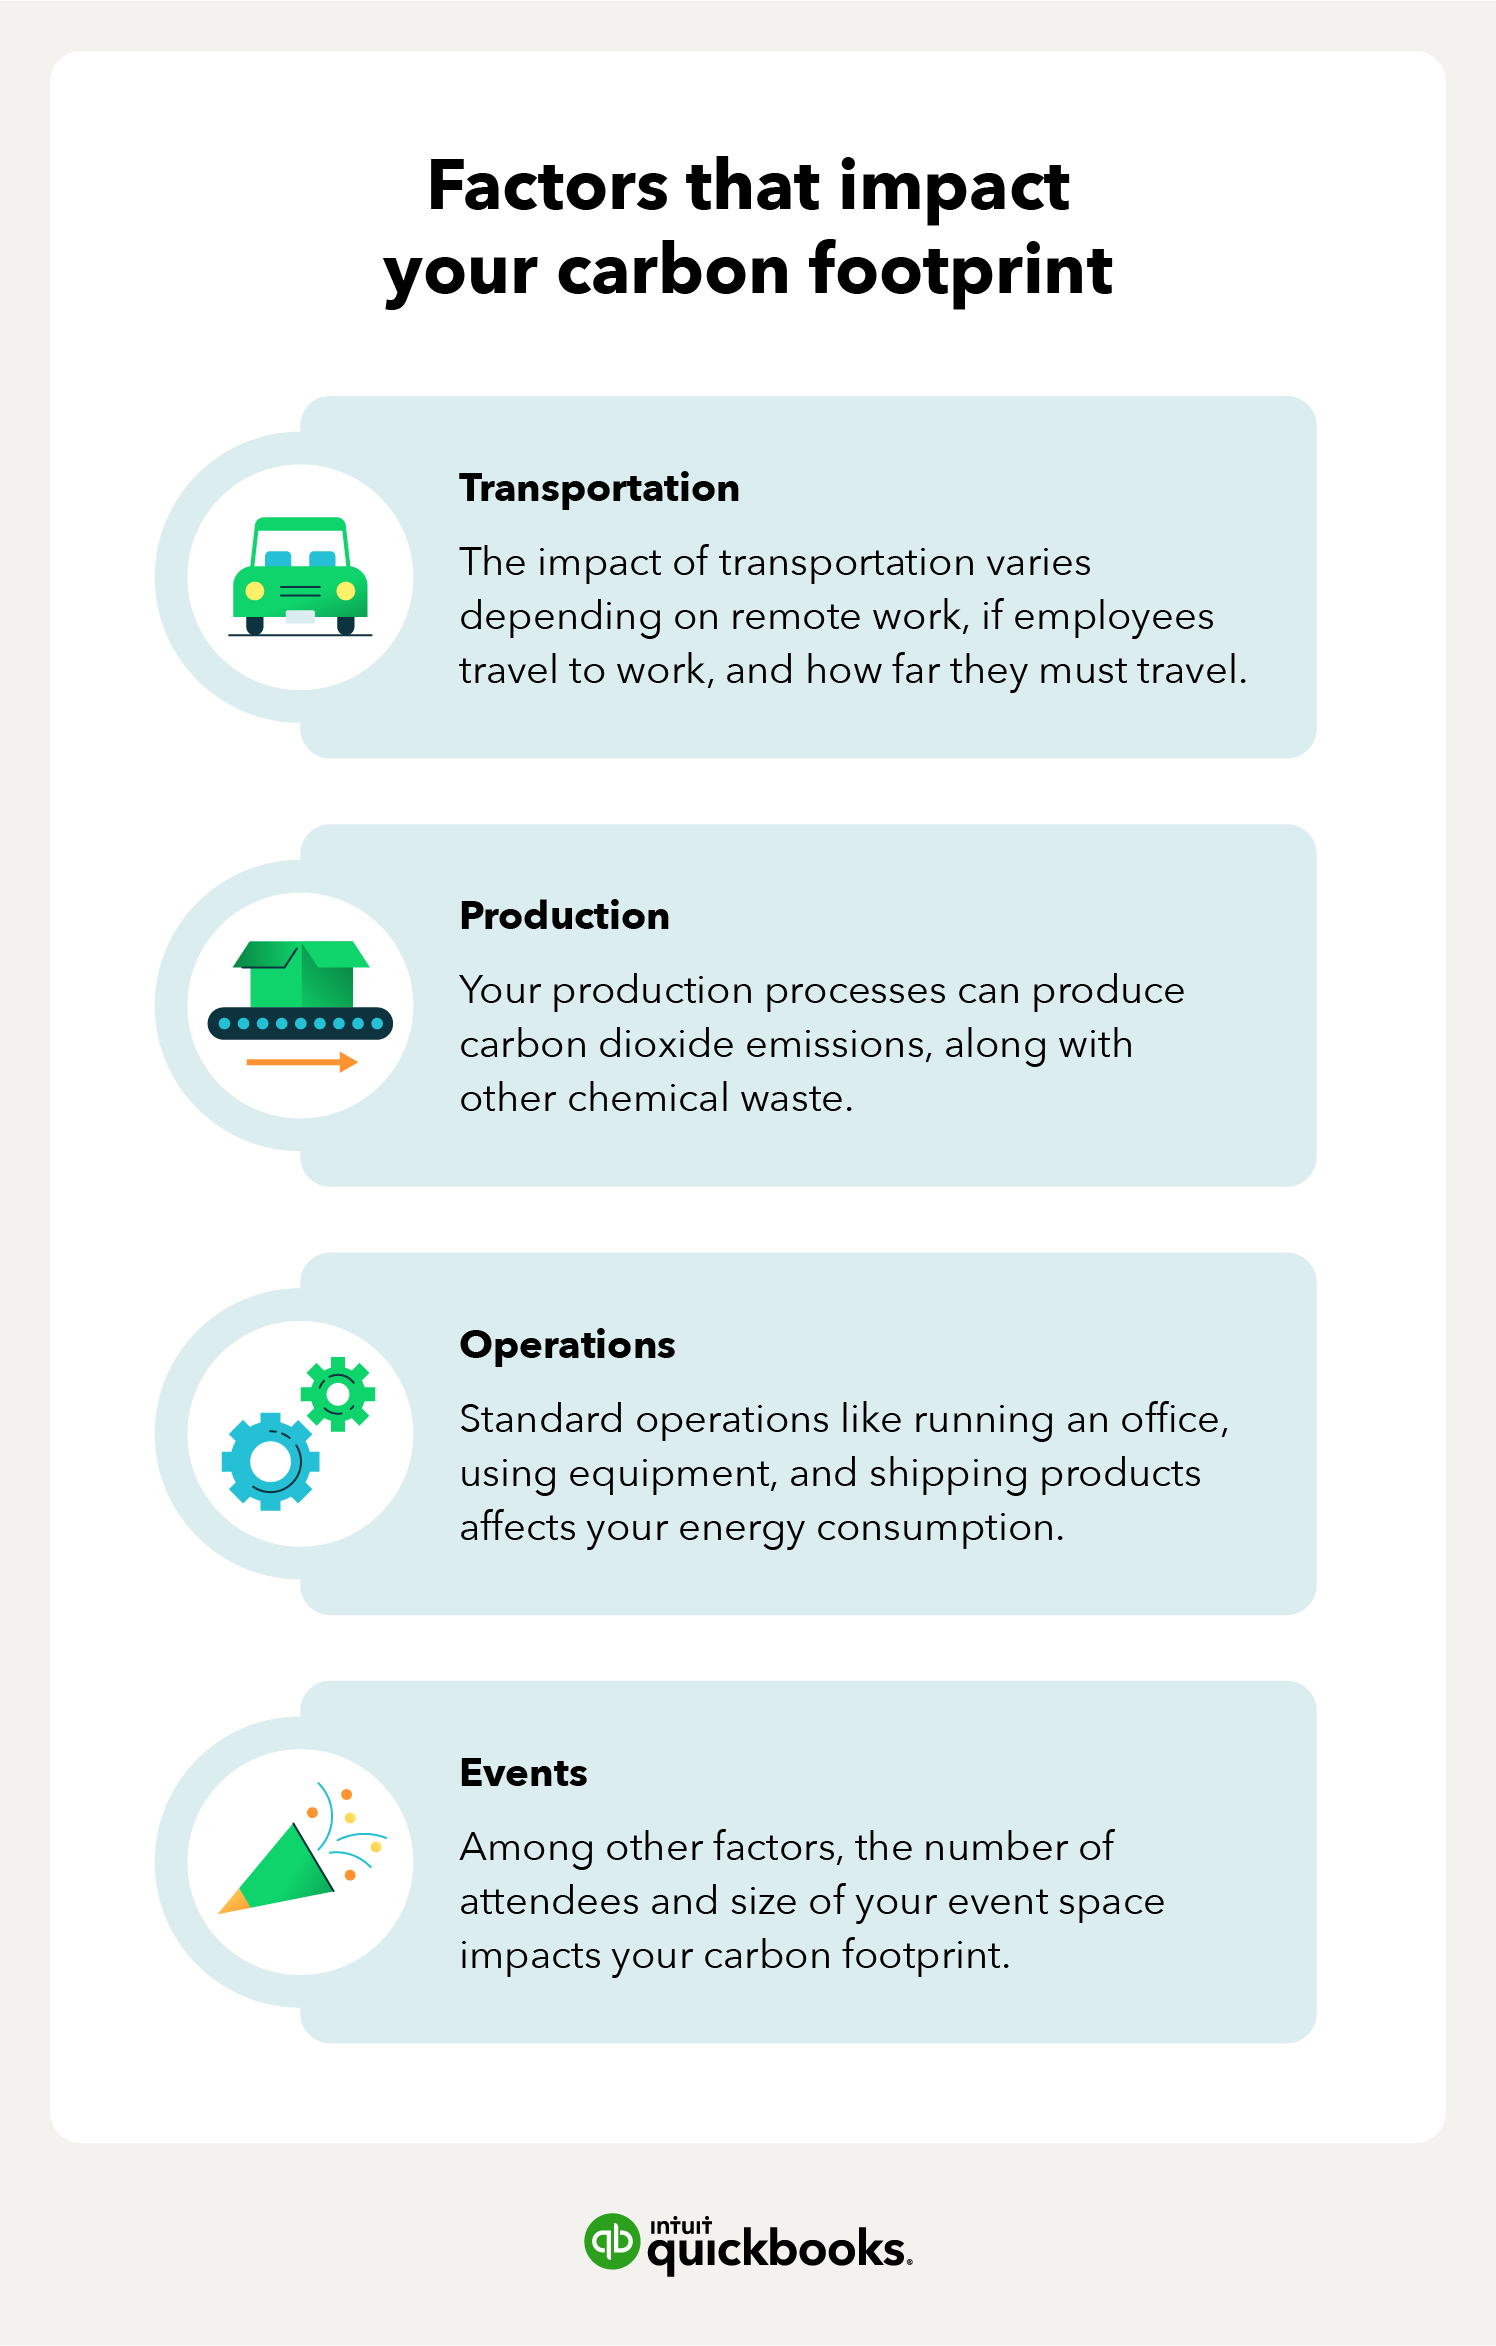 Factors that impact your carbon footprint